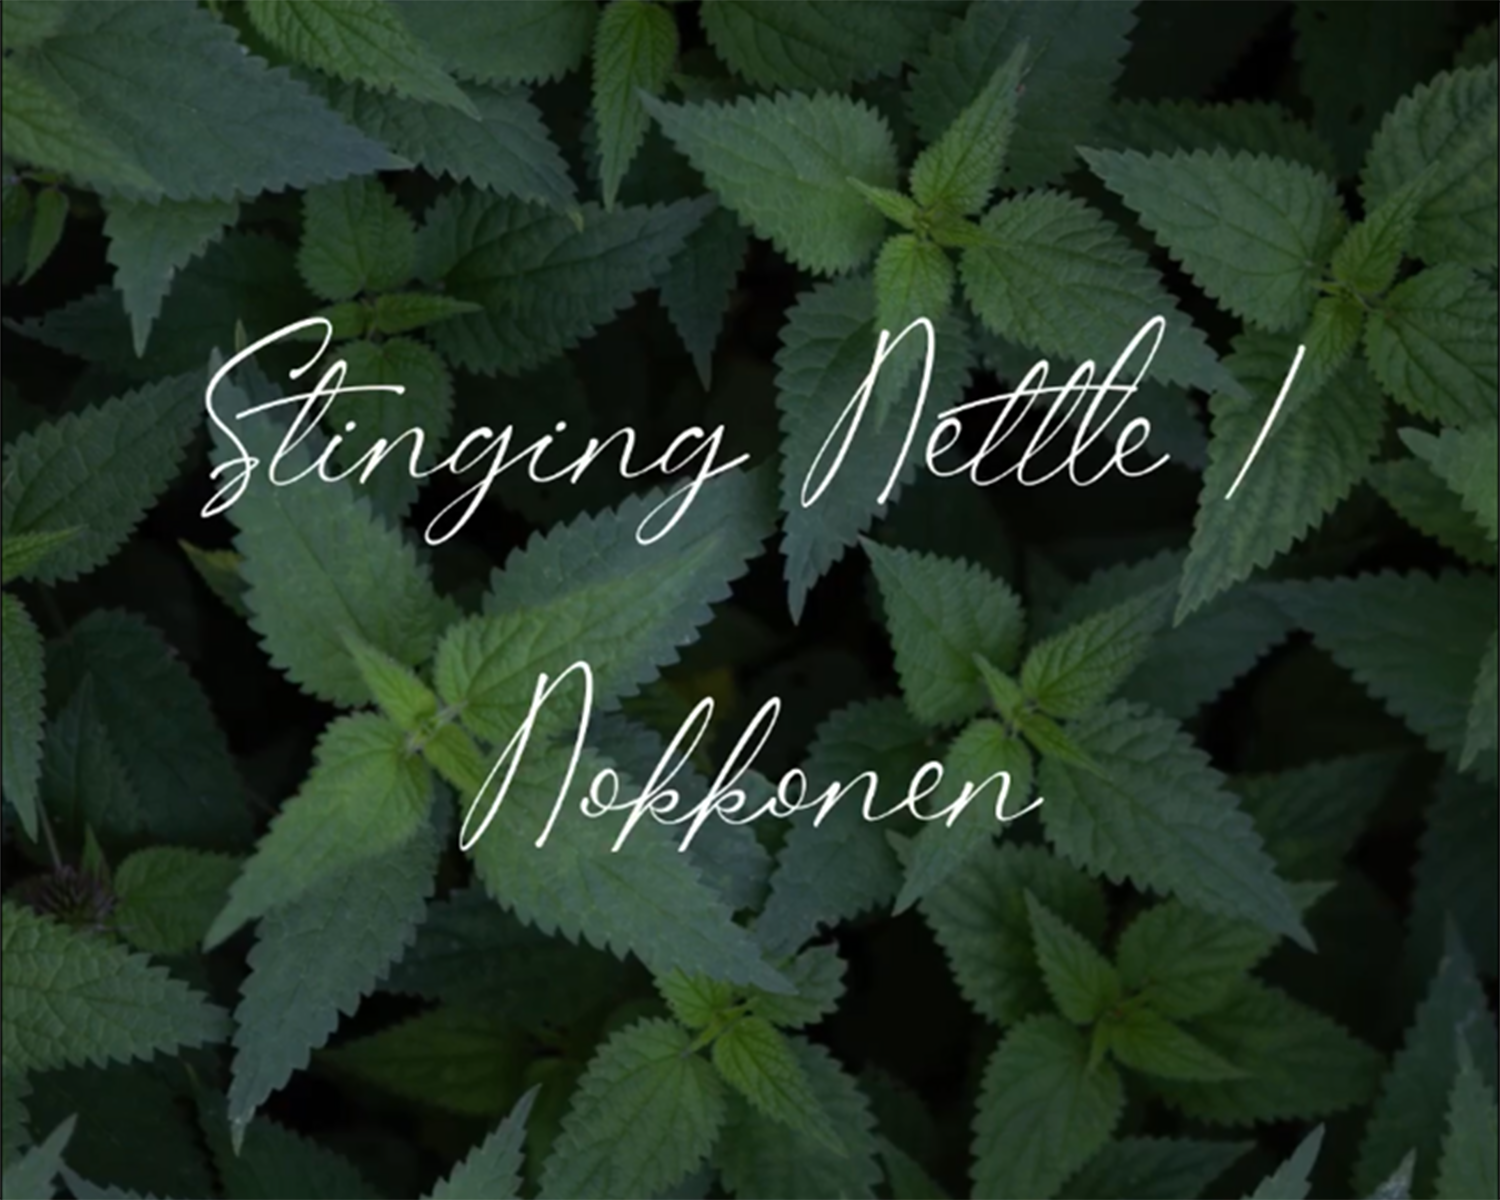 Stinging Nettle - The King of Finnish Wild Vegetables